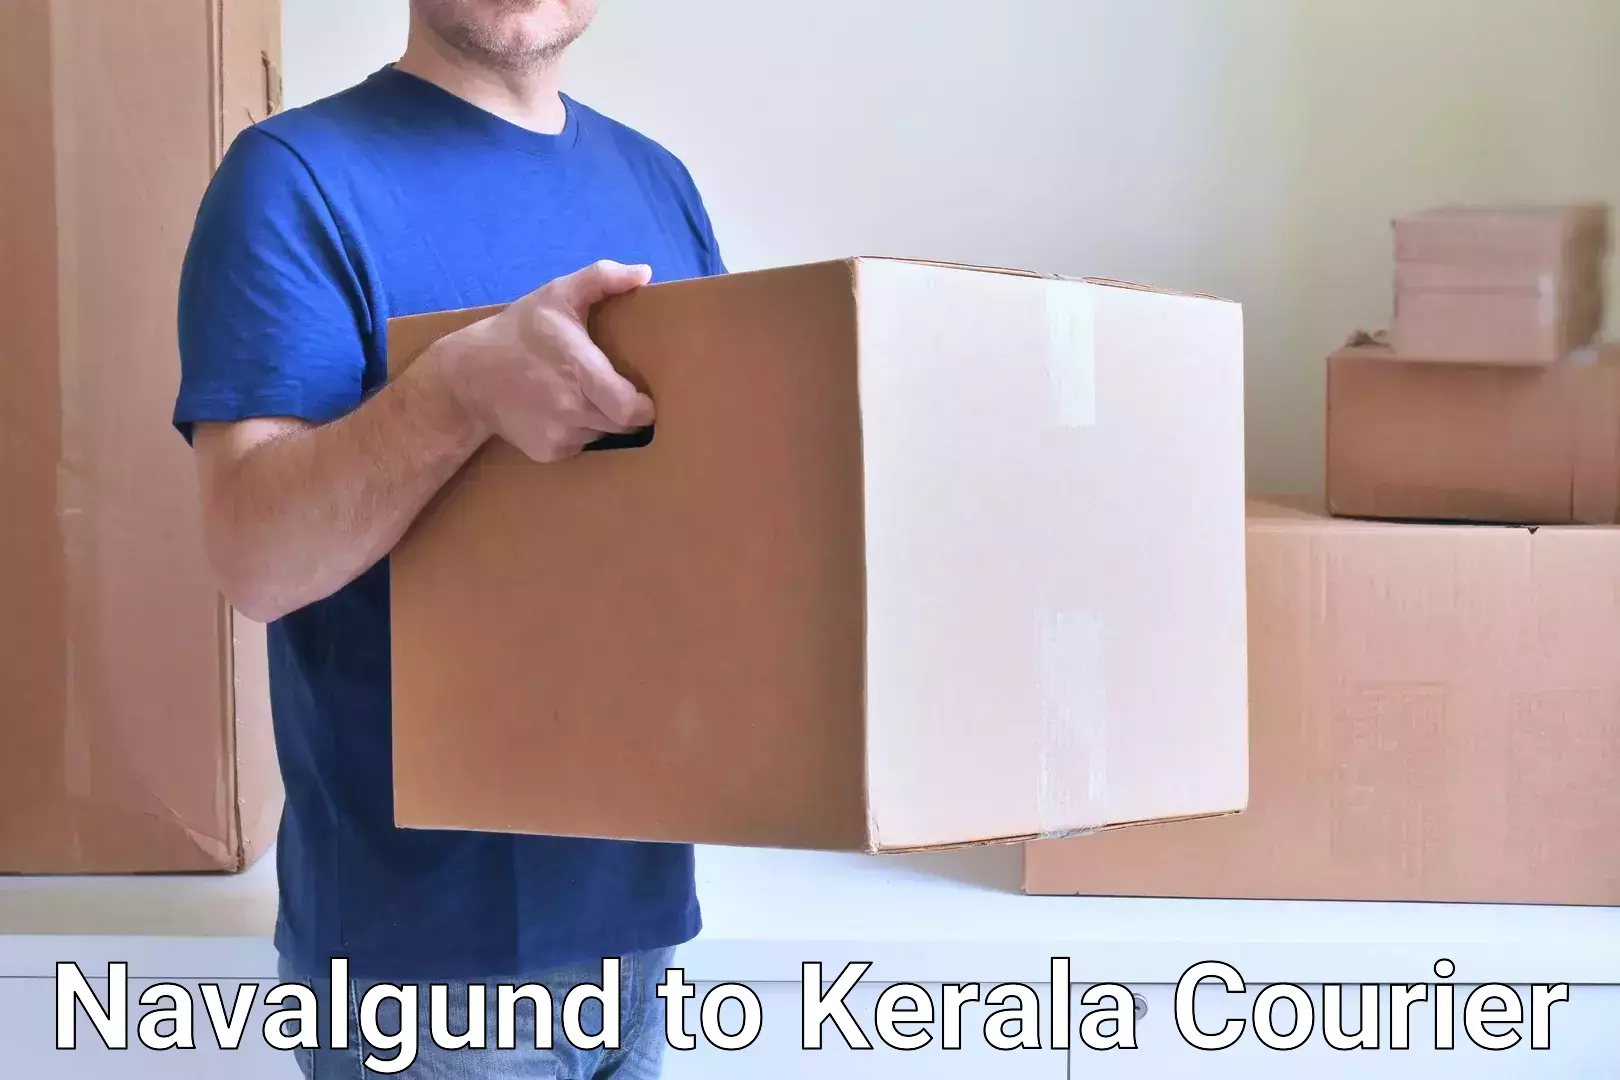 Courier service efficiency in Navalgund to Kerala